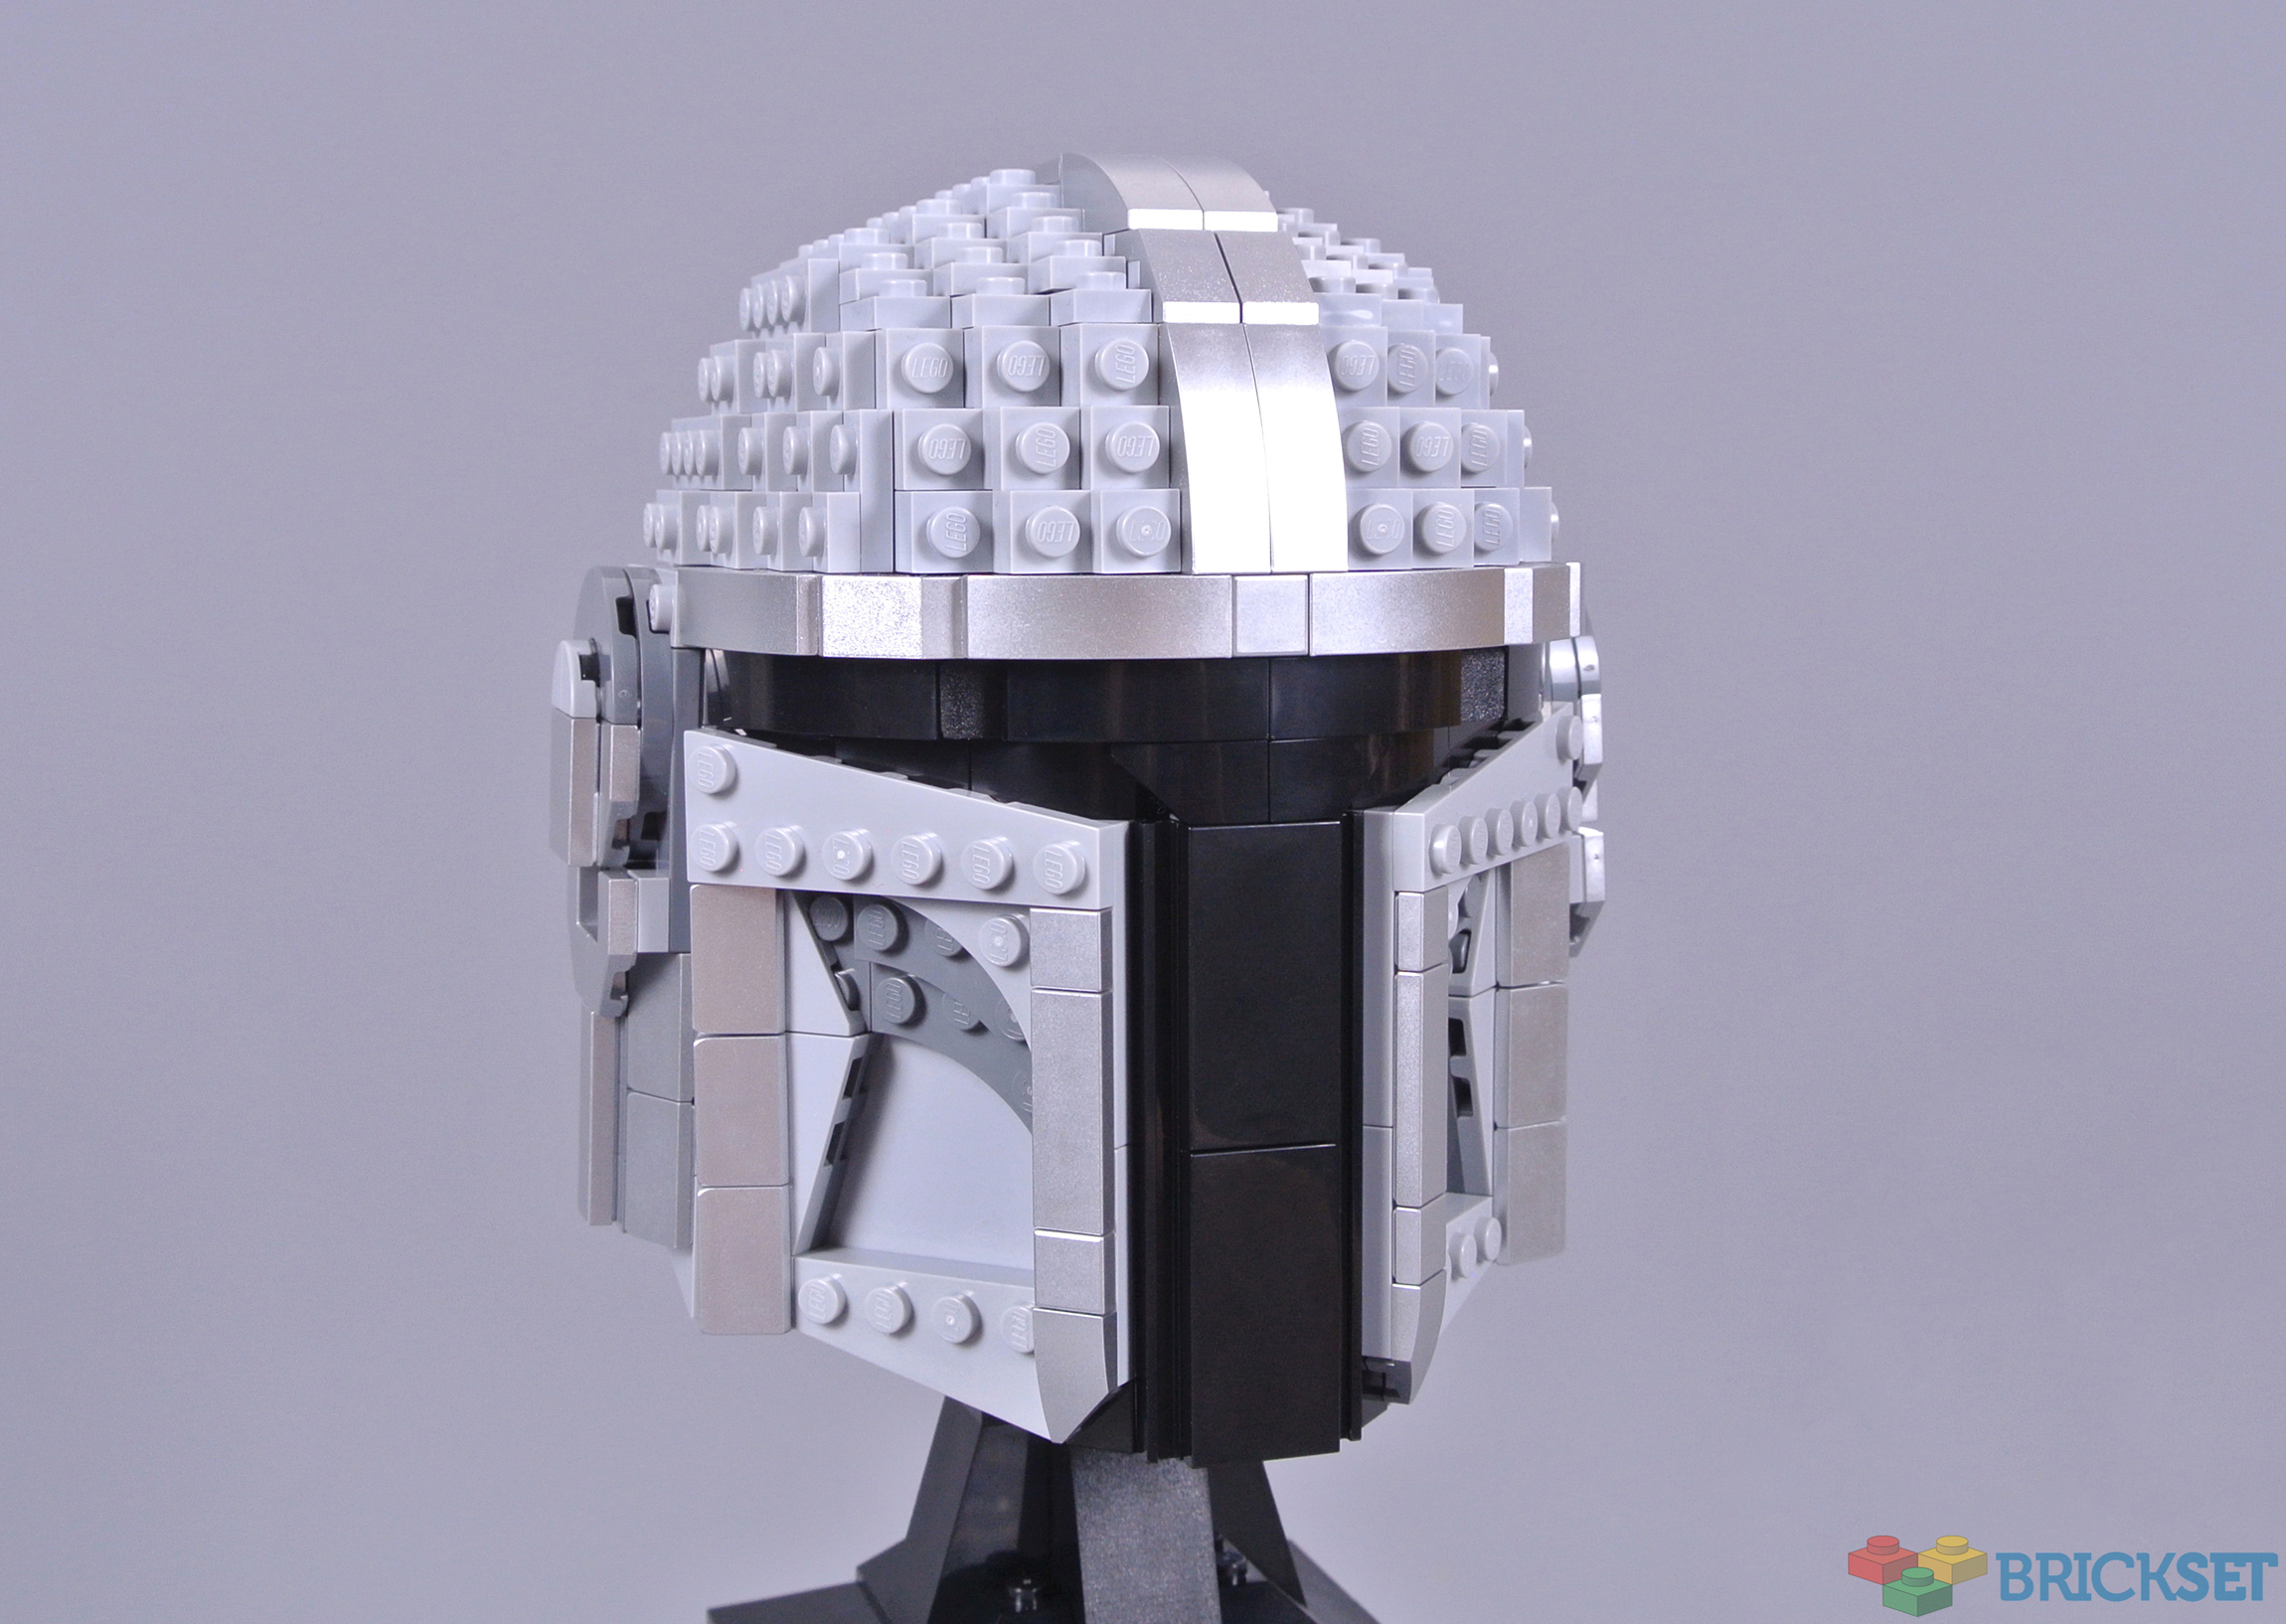 LEGO 75328 The Mandalorian Helmet review | Brickset